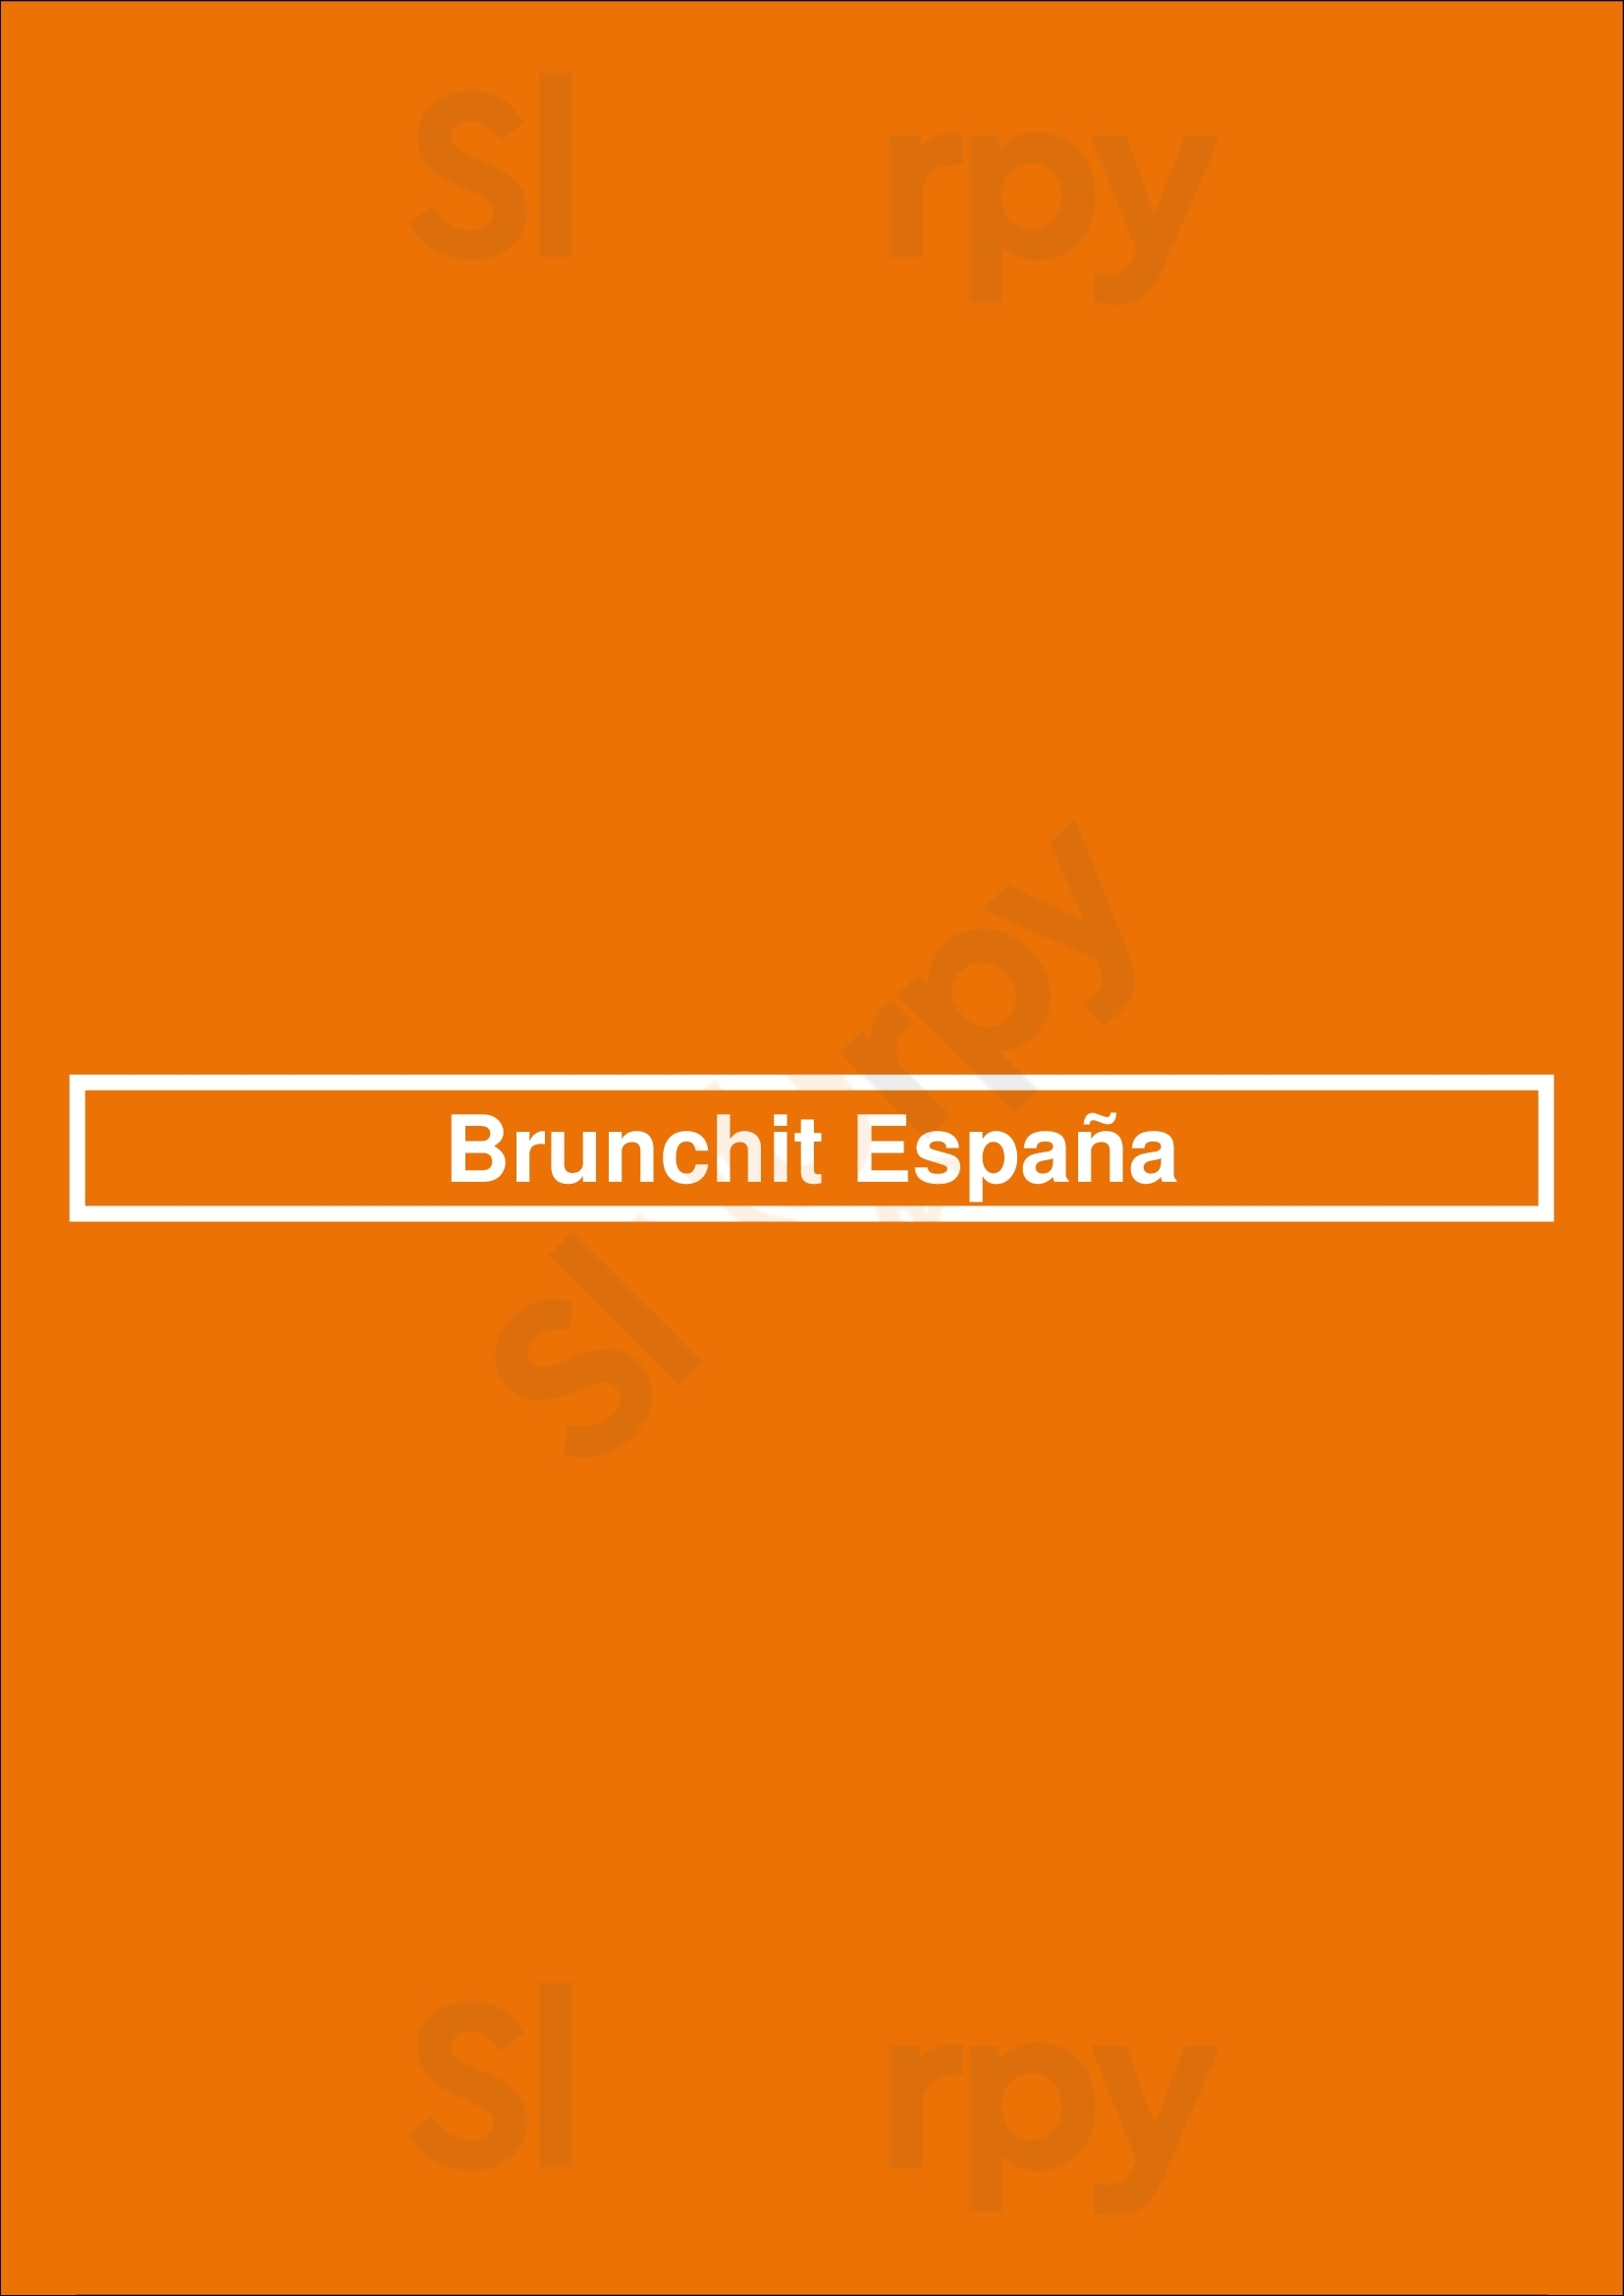 Brunchit - Alhóndiga Málaga Menu - 1